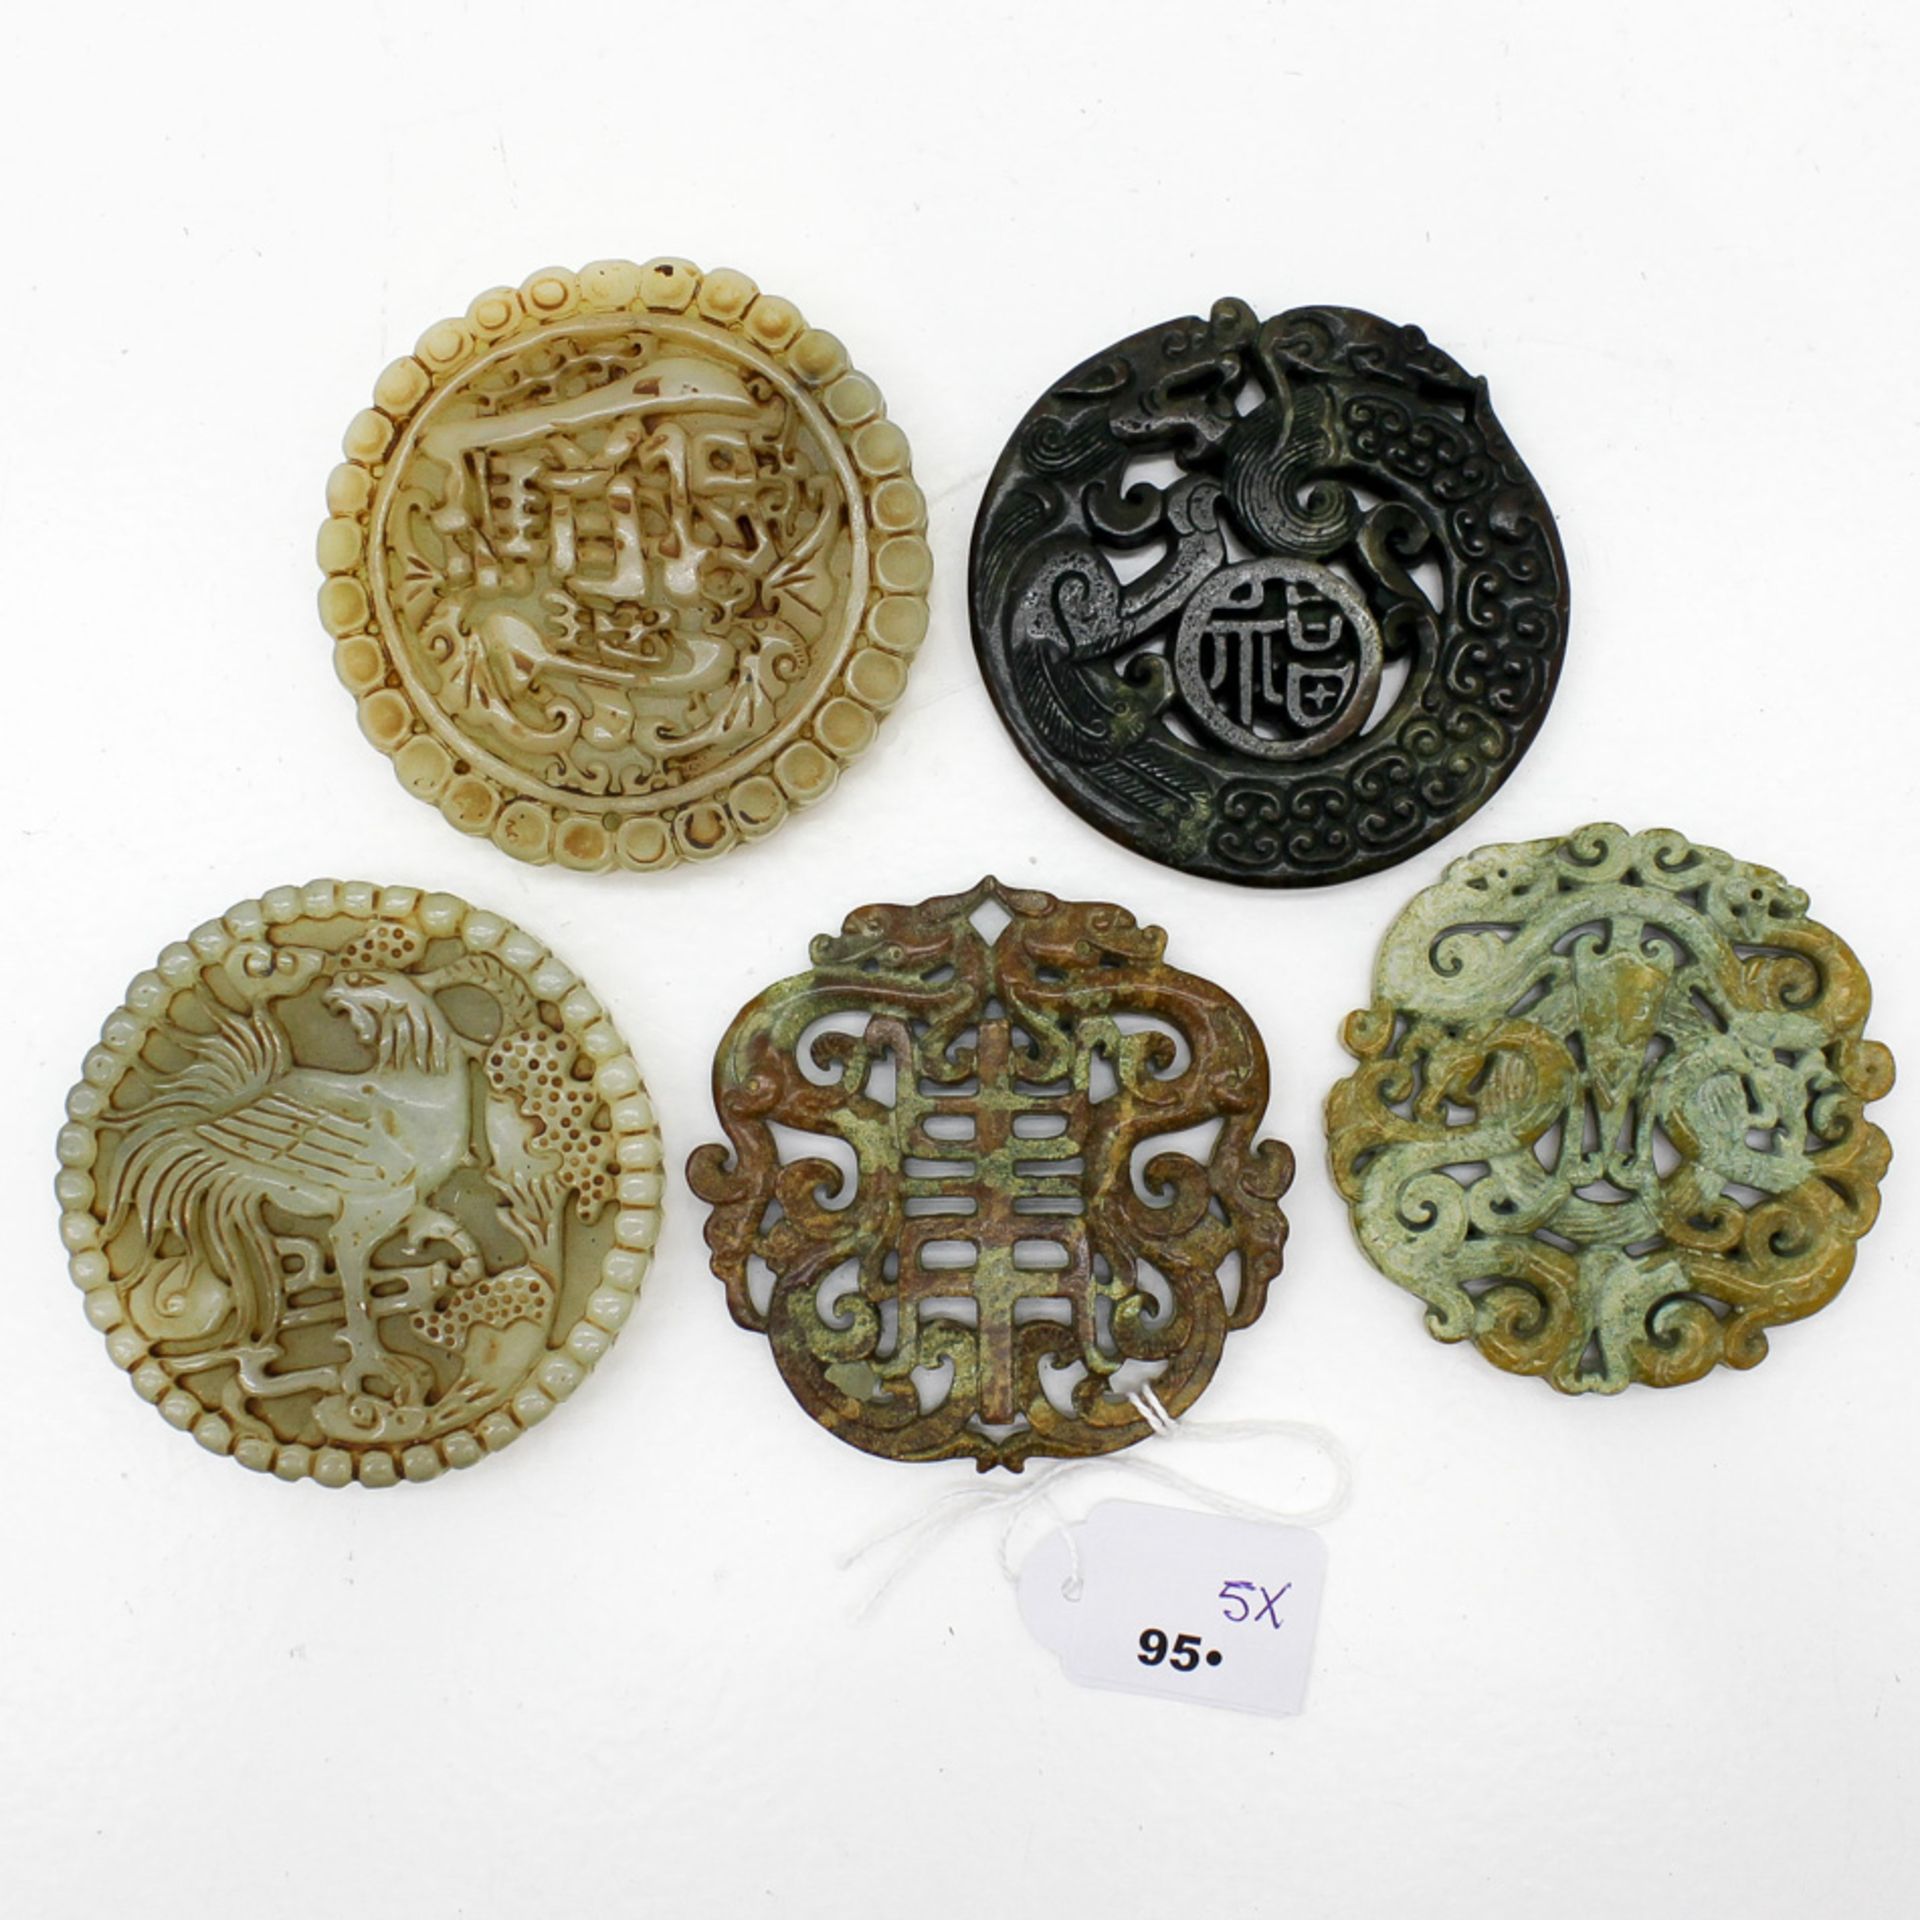 Lot of 5 Carved Chinese Jade Plaques 7 cm in diameter. - Bild 2 aus 2